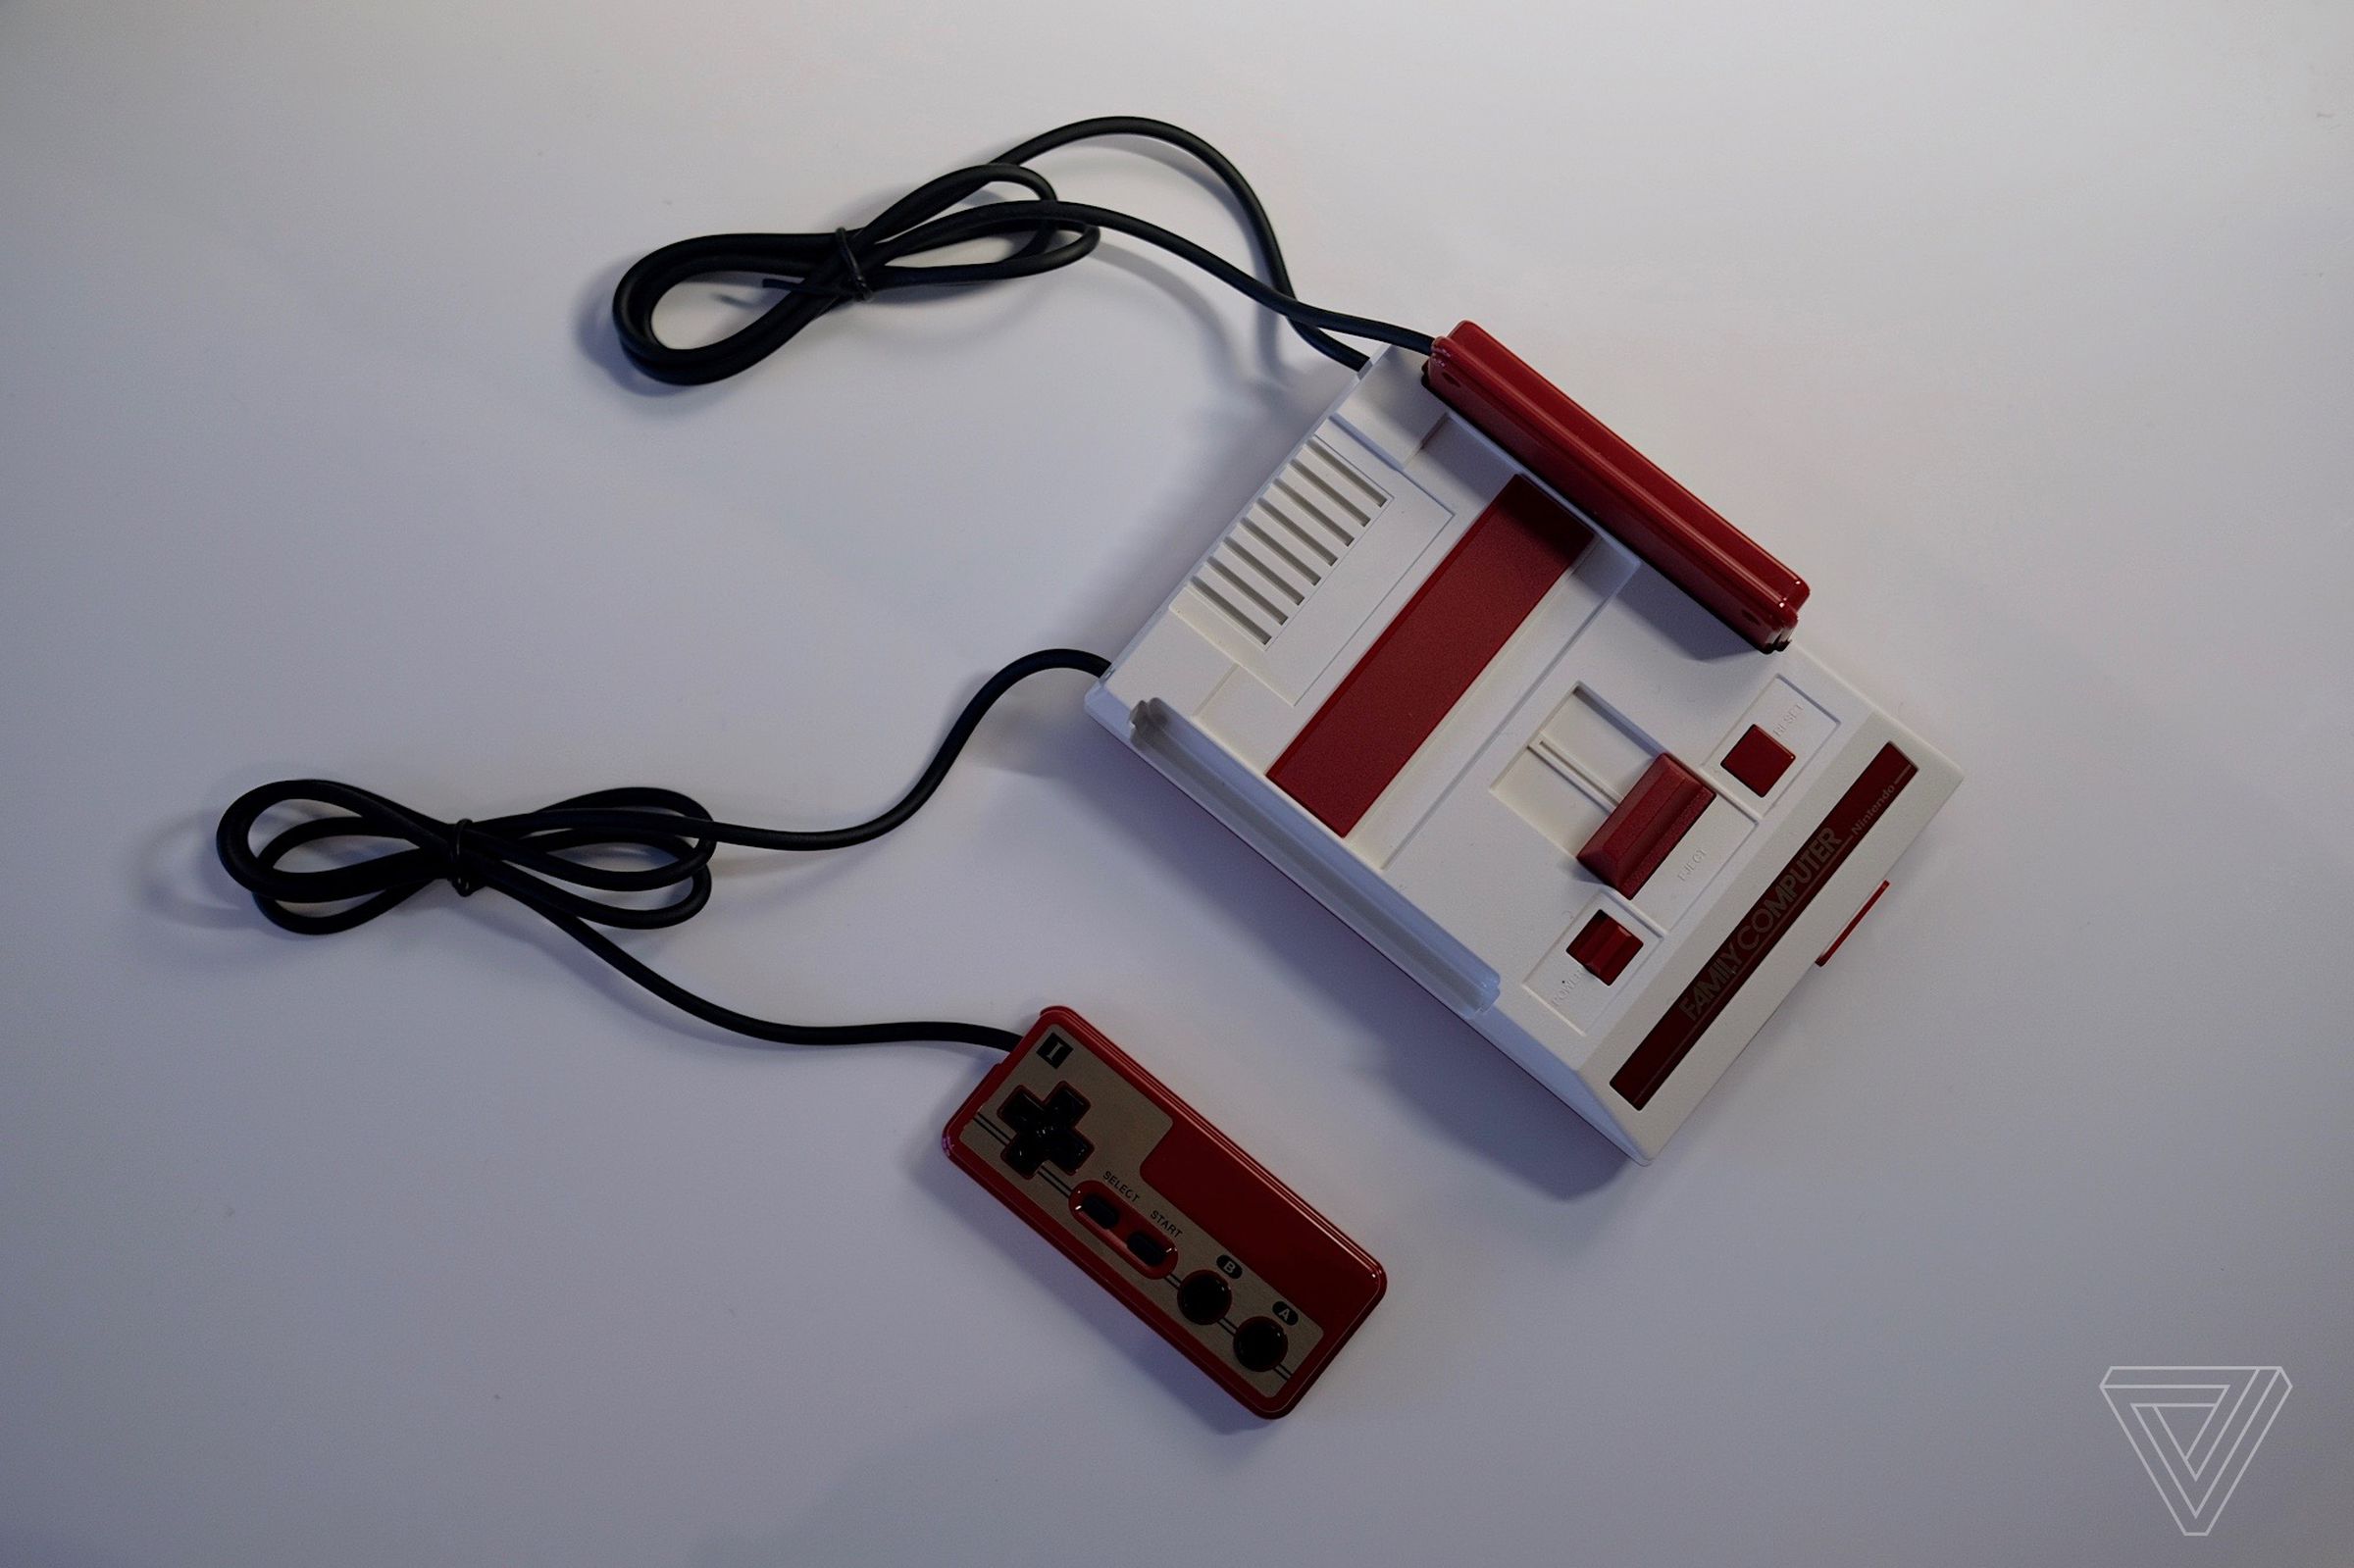 Nintendo Classic Mini Famicom photos